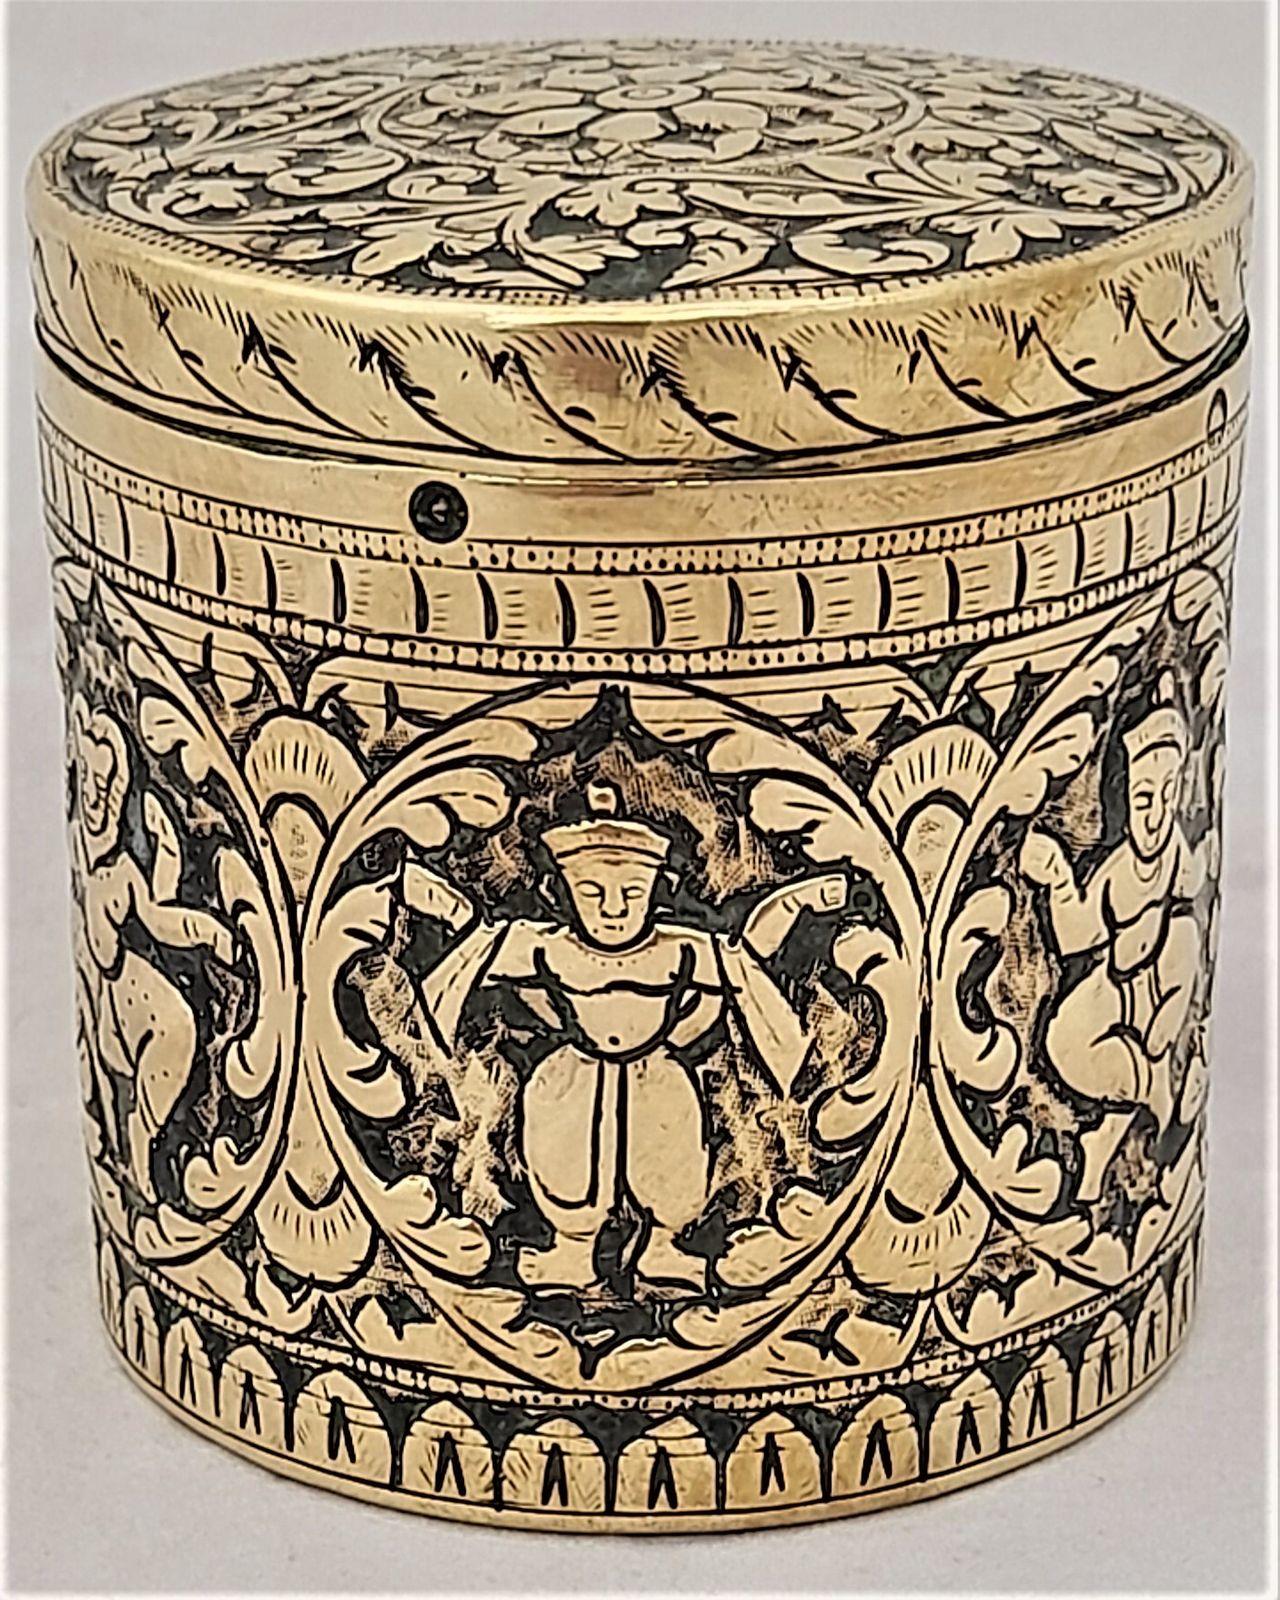 Antique Indian Brass lidded box chased decorated Hindu Vishnu - 19th C - avatars Matsya Kurma Varaha Narasimha British Raj cylindrical spice 6.8 cm H